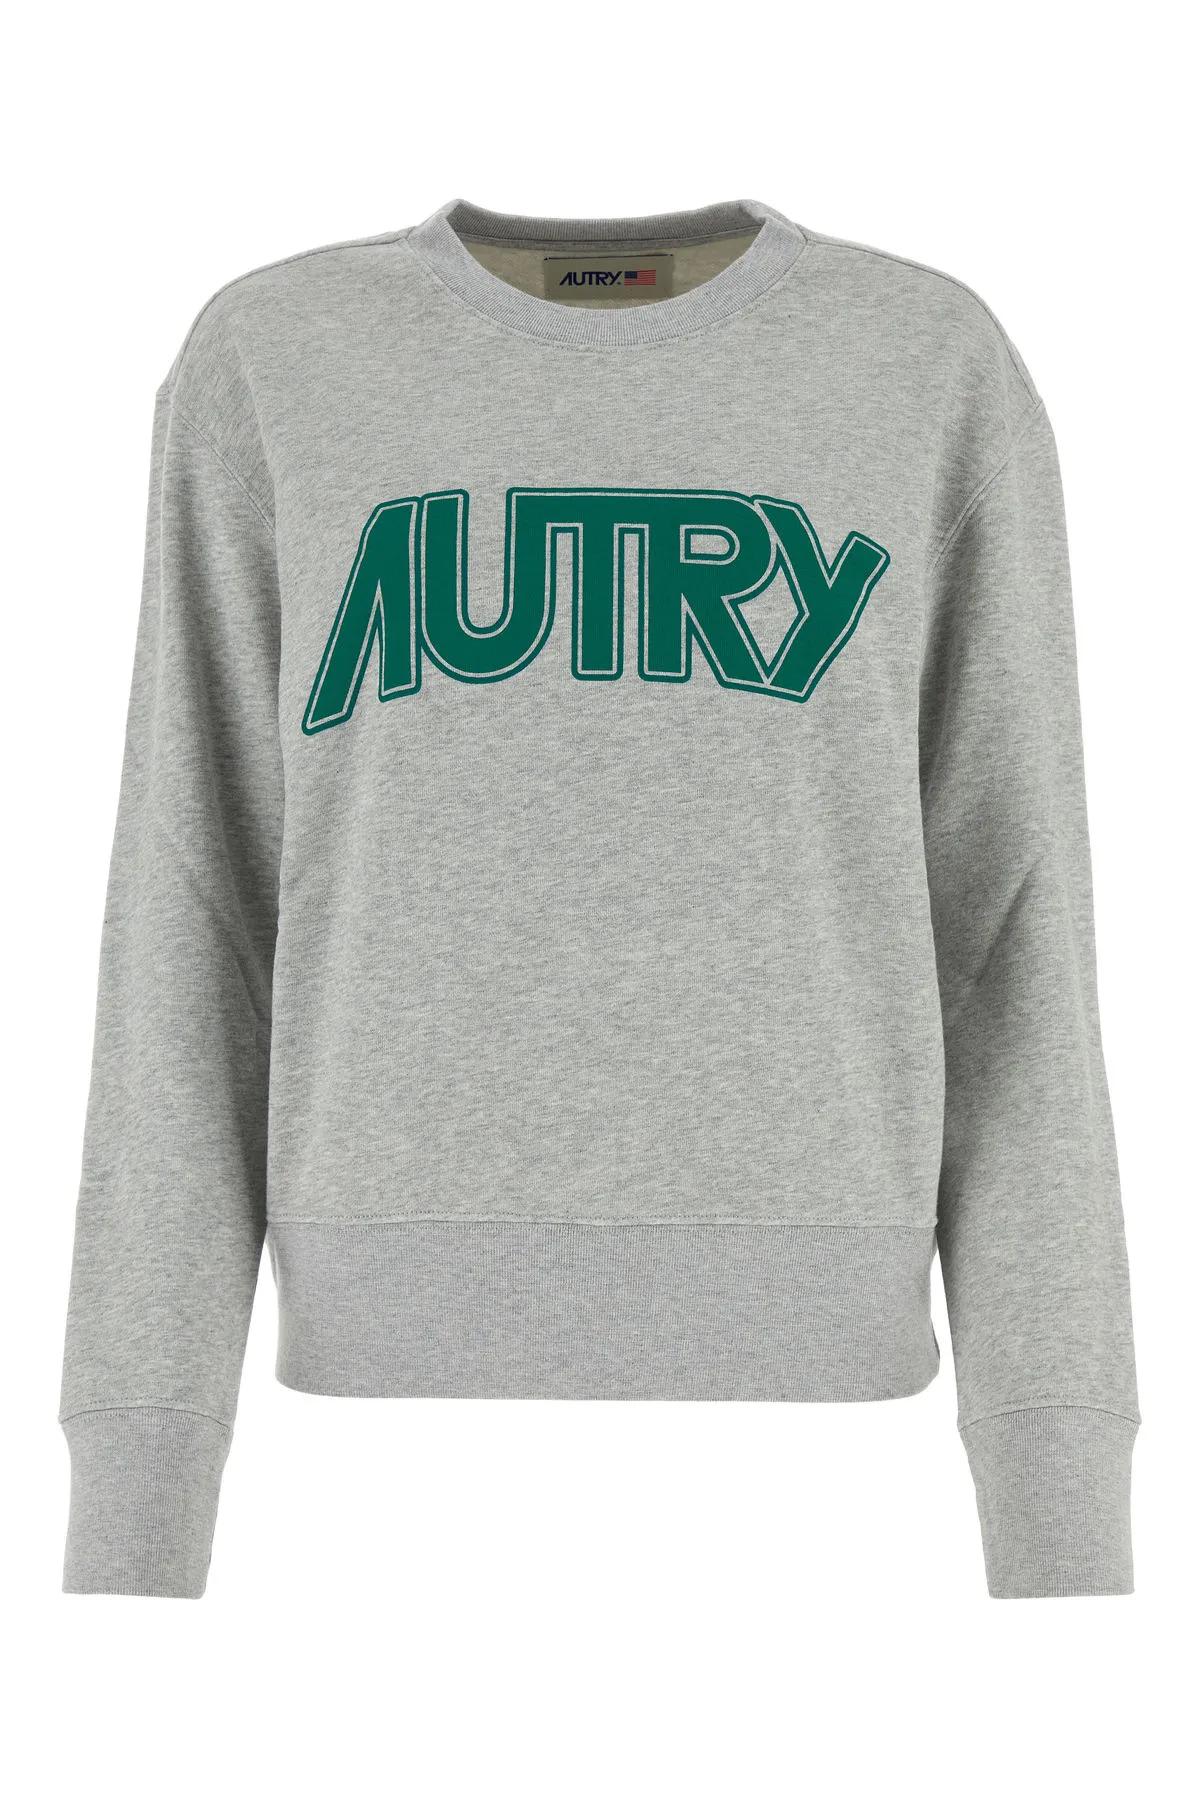 Shop Autry Melange Grey Cotton Sweatshirt